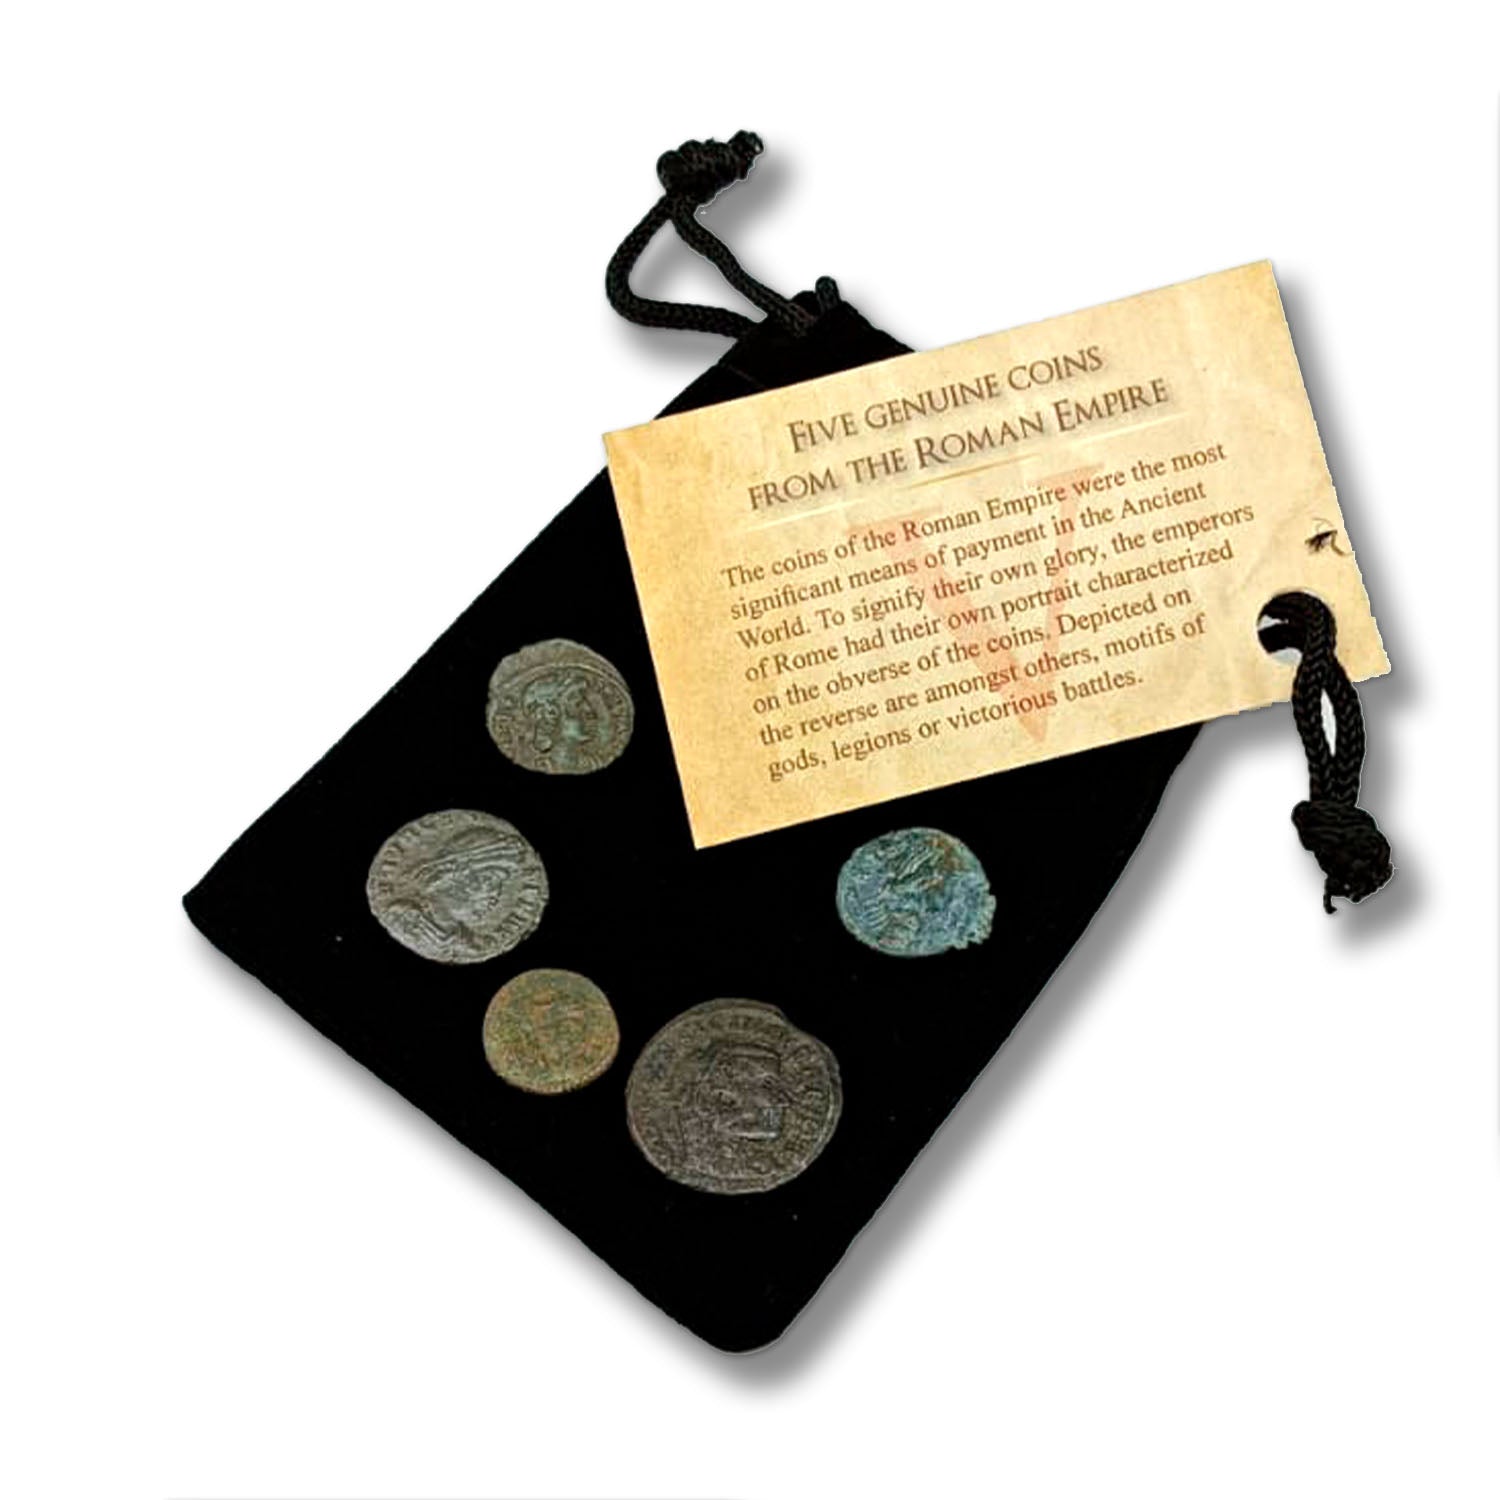  IMPACTO COLECCIONABLES Coin Collection Storagе